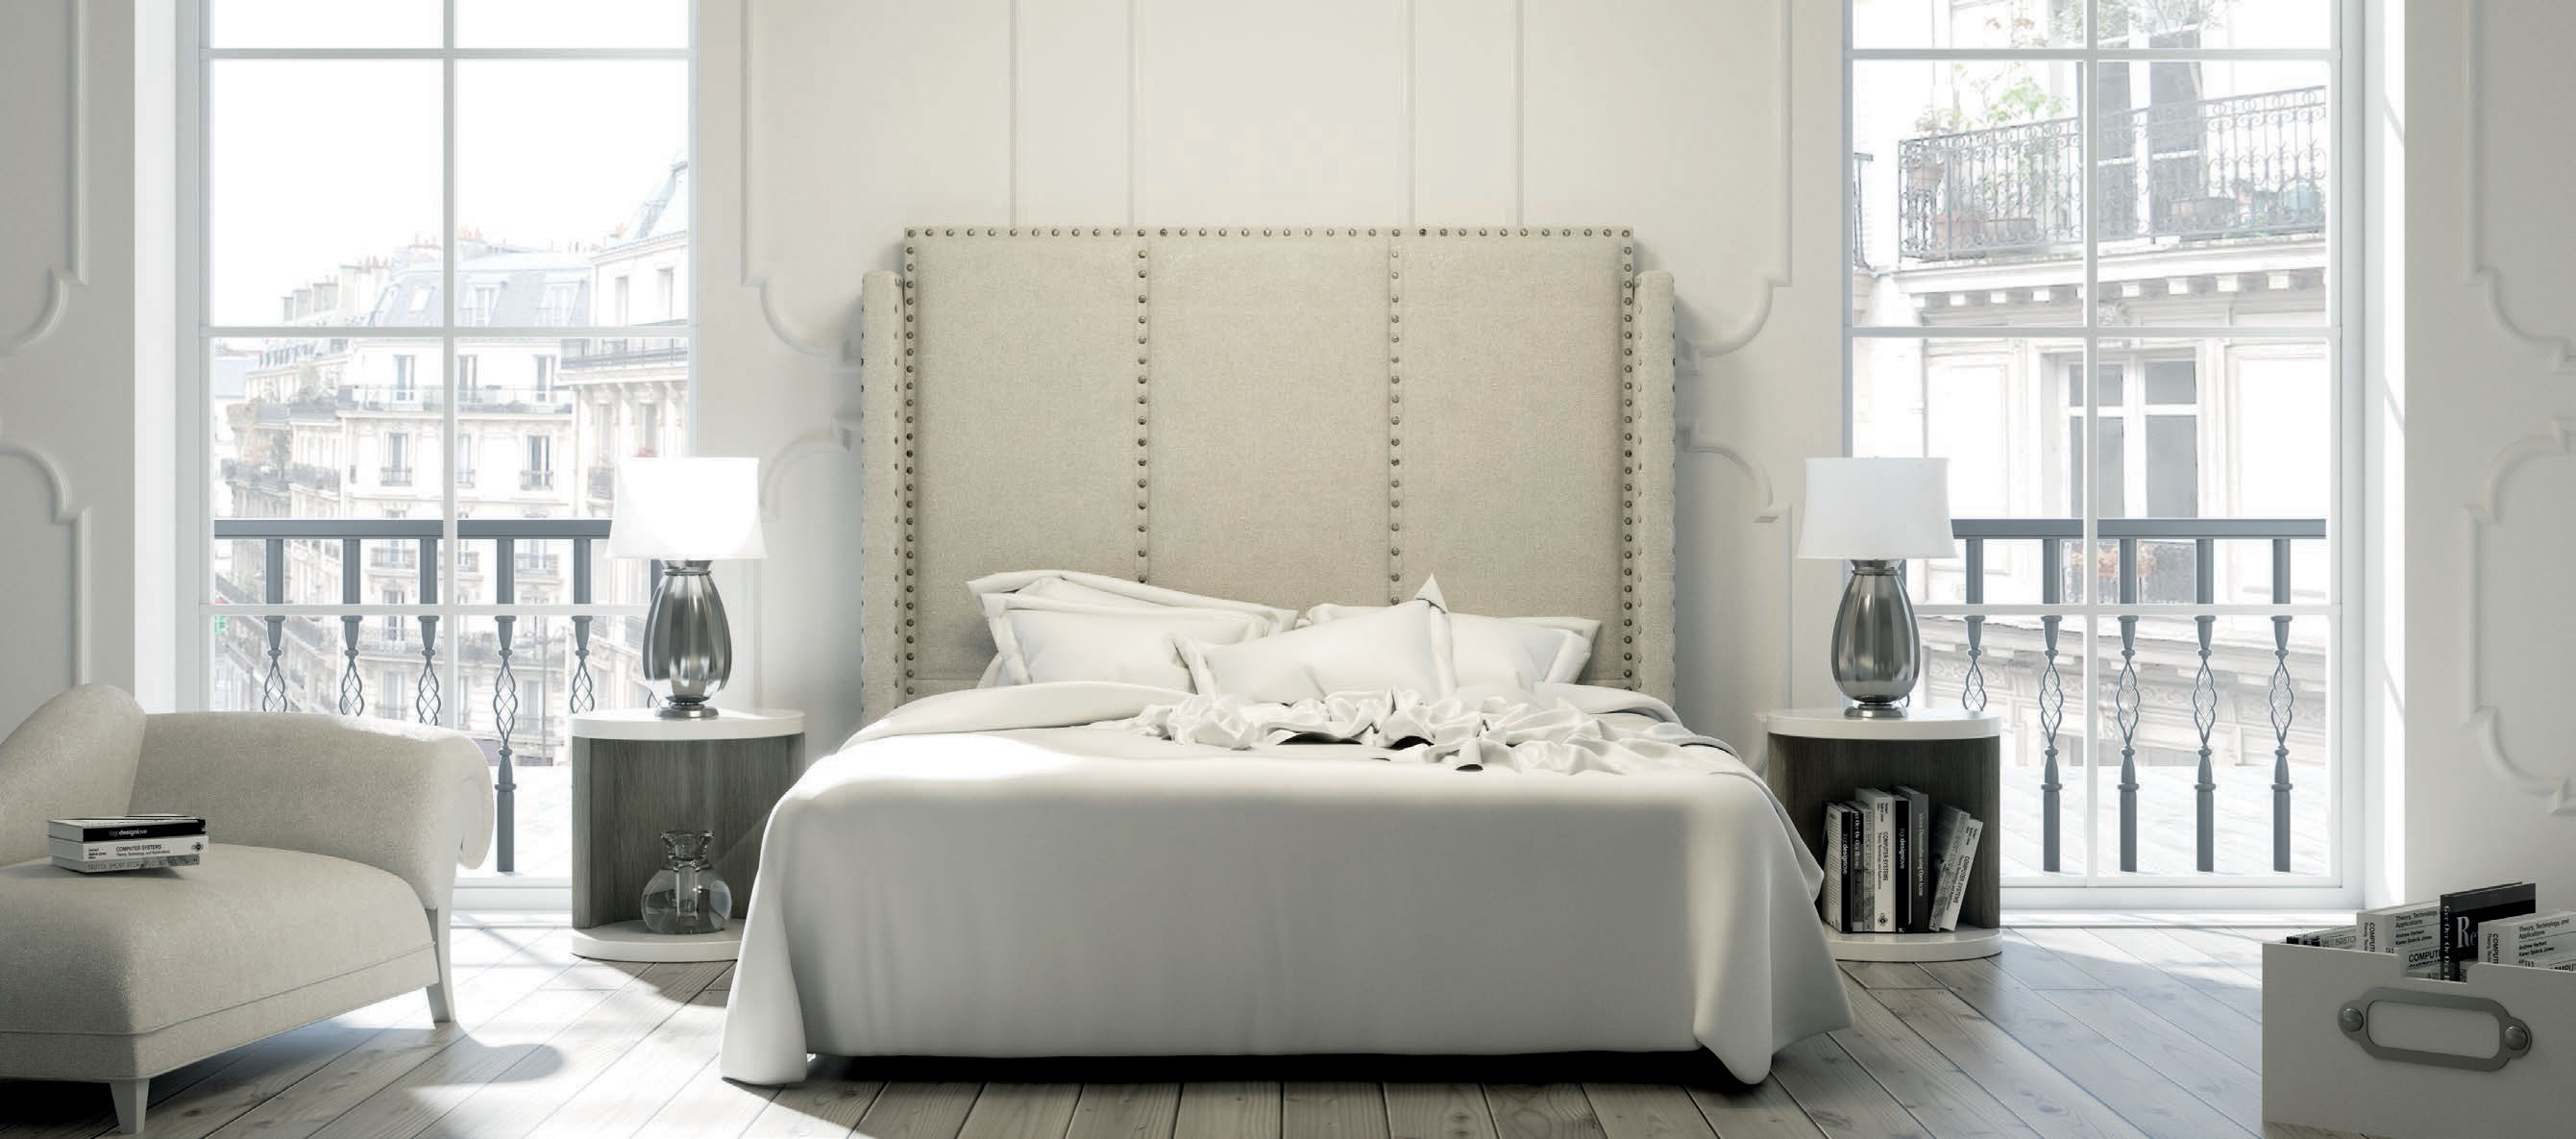 Brands Franco Furniture Bedrooms vol2, Spain DOR 152